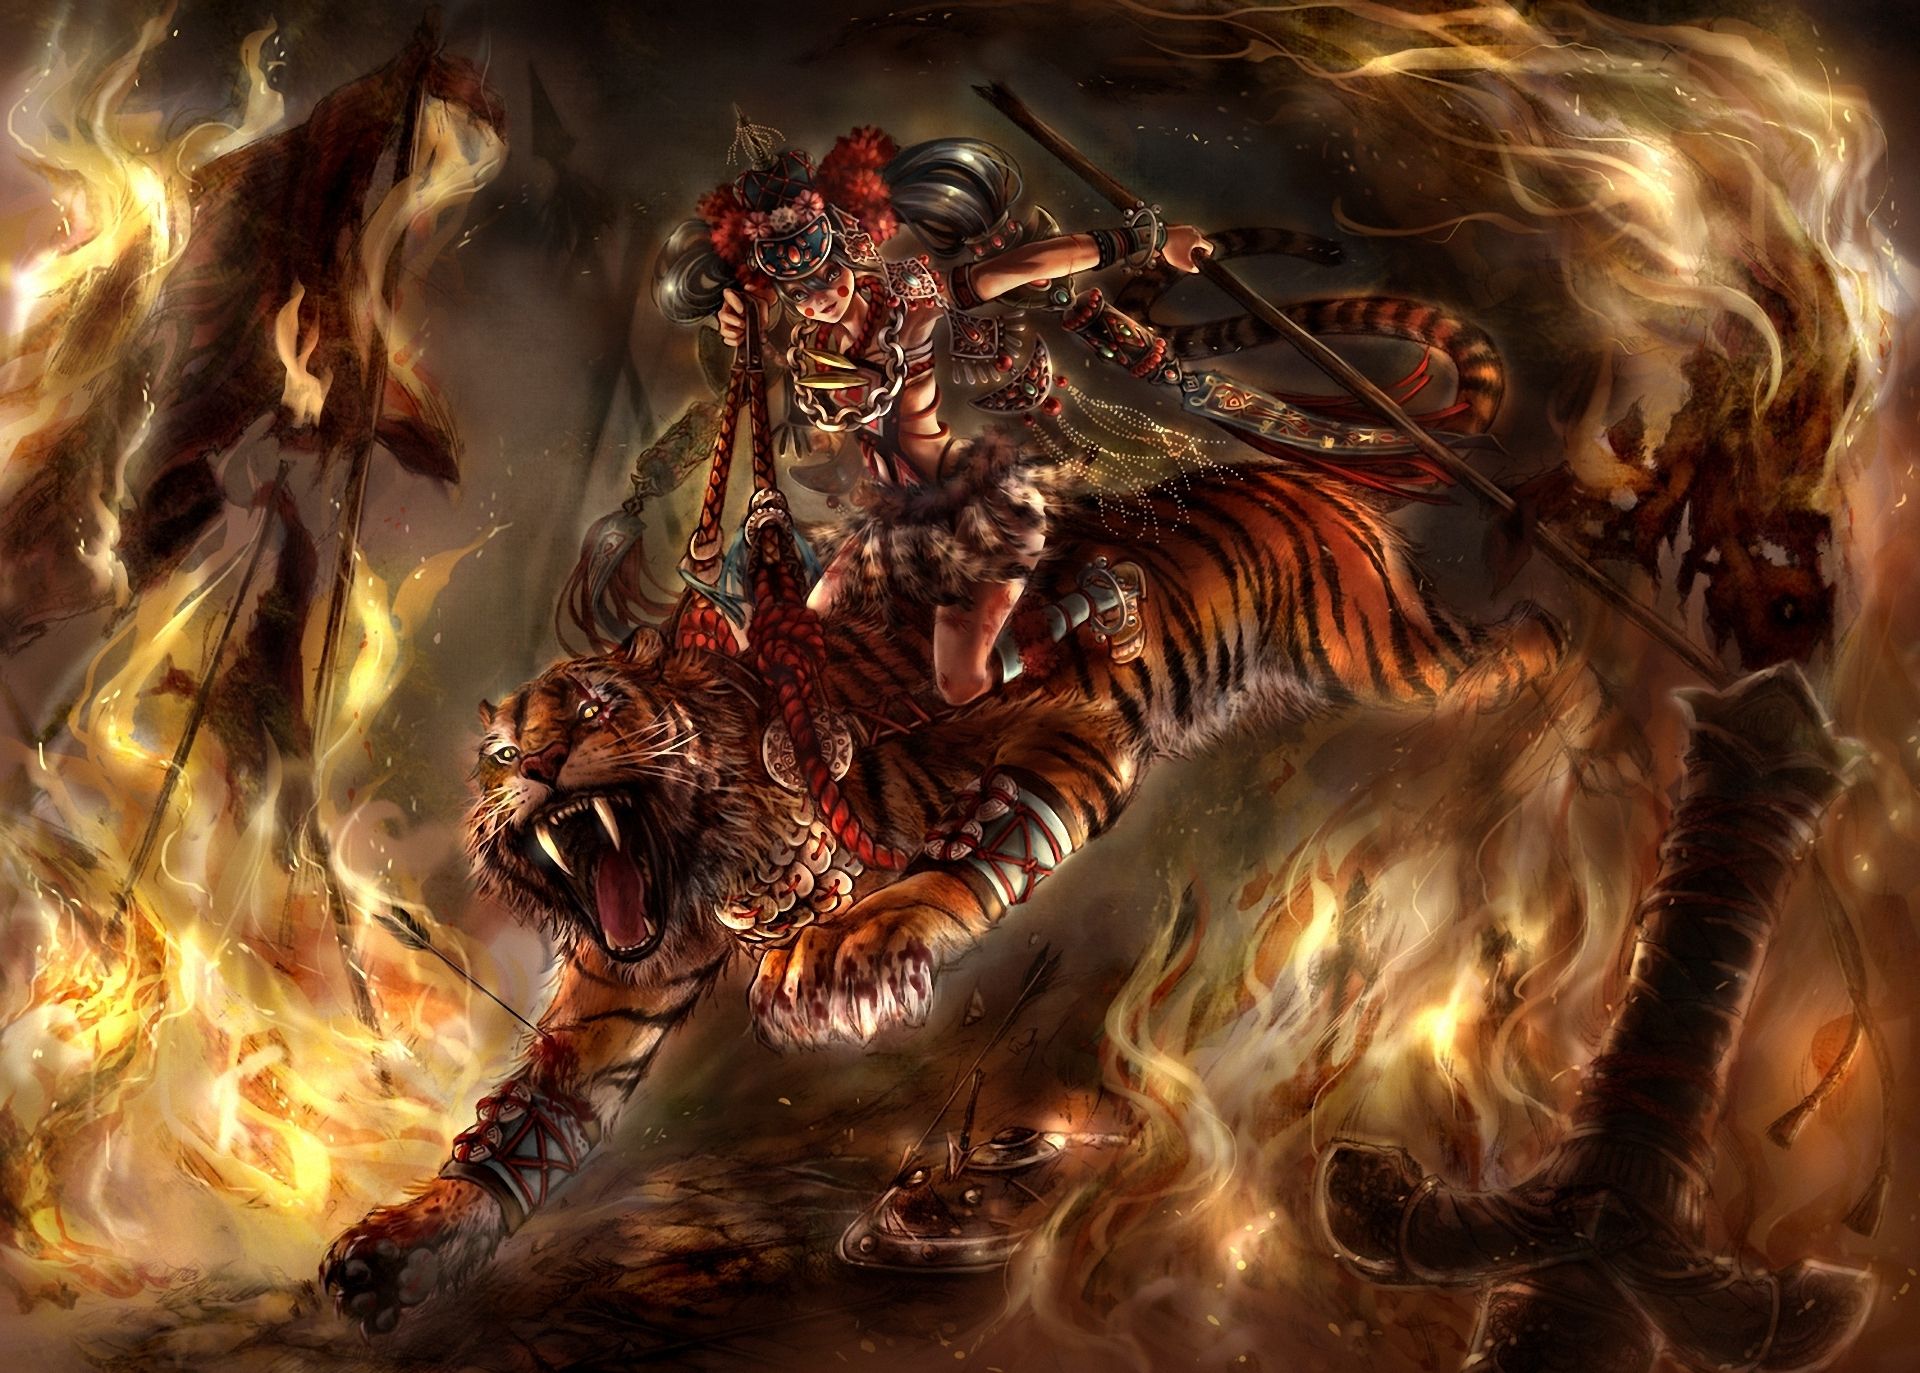 Fantasy warriors tigers animals fire flames dark battle wallpapers